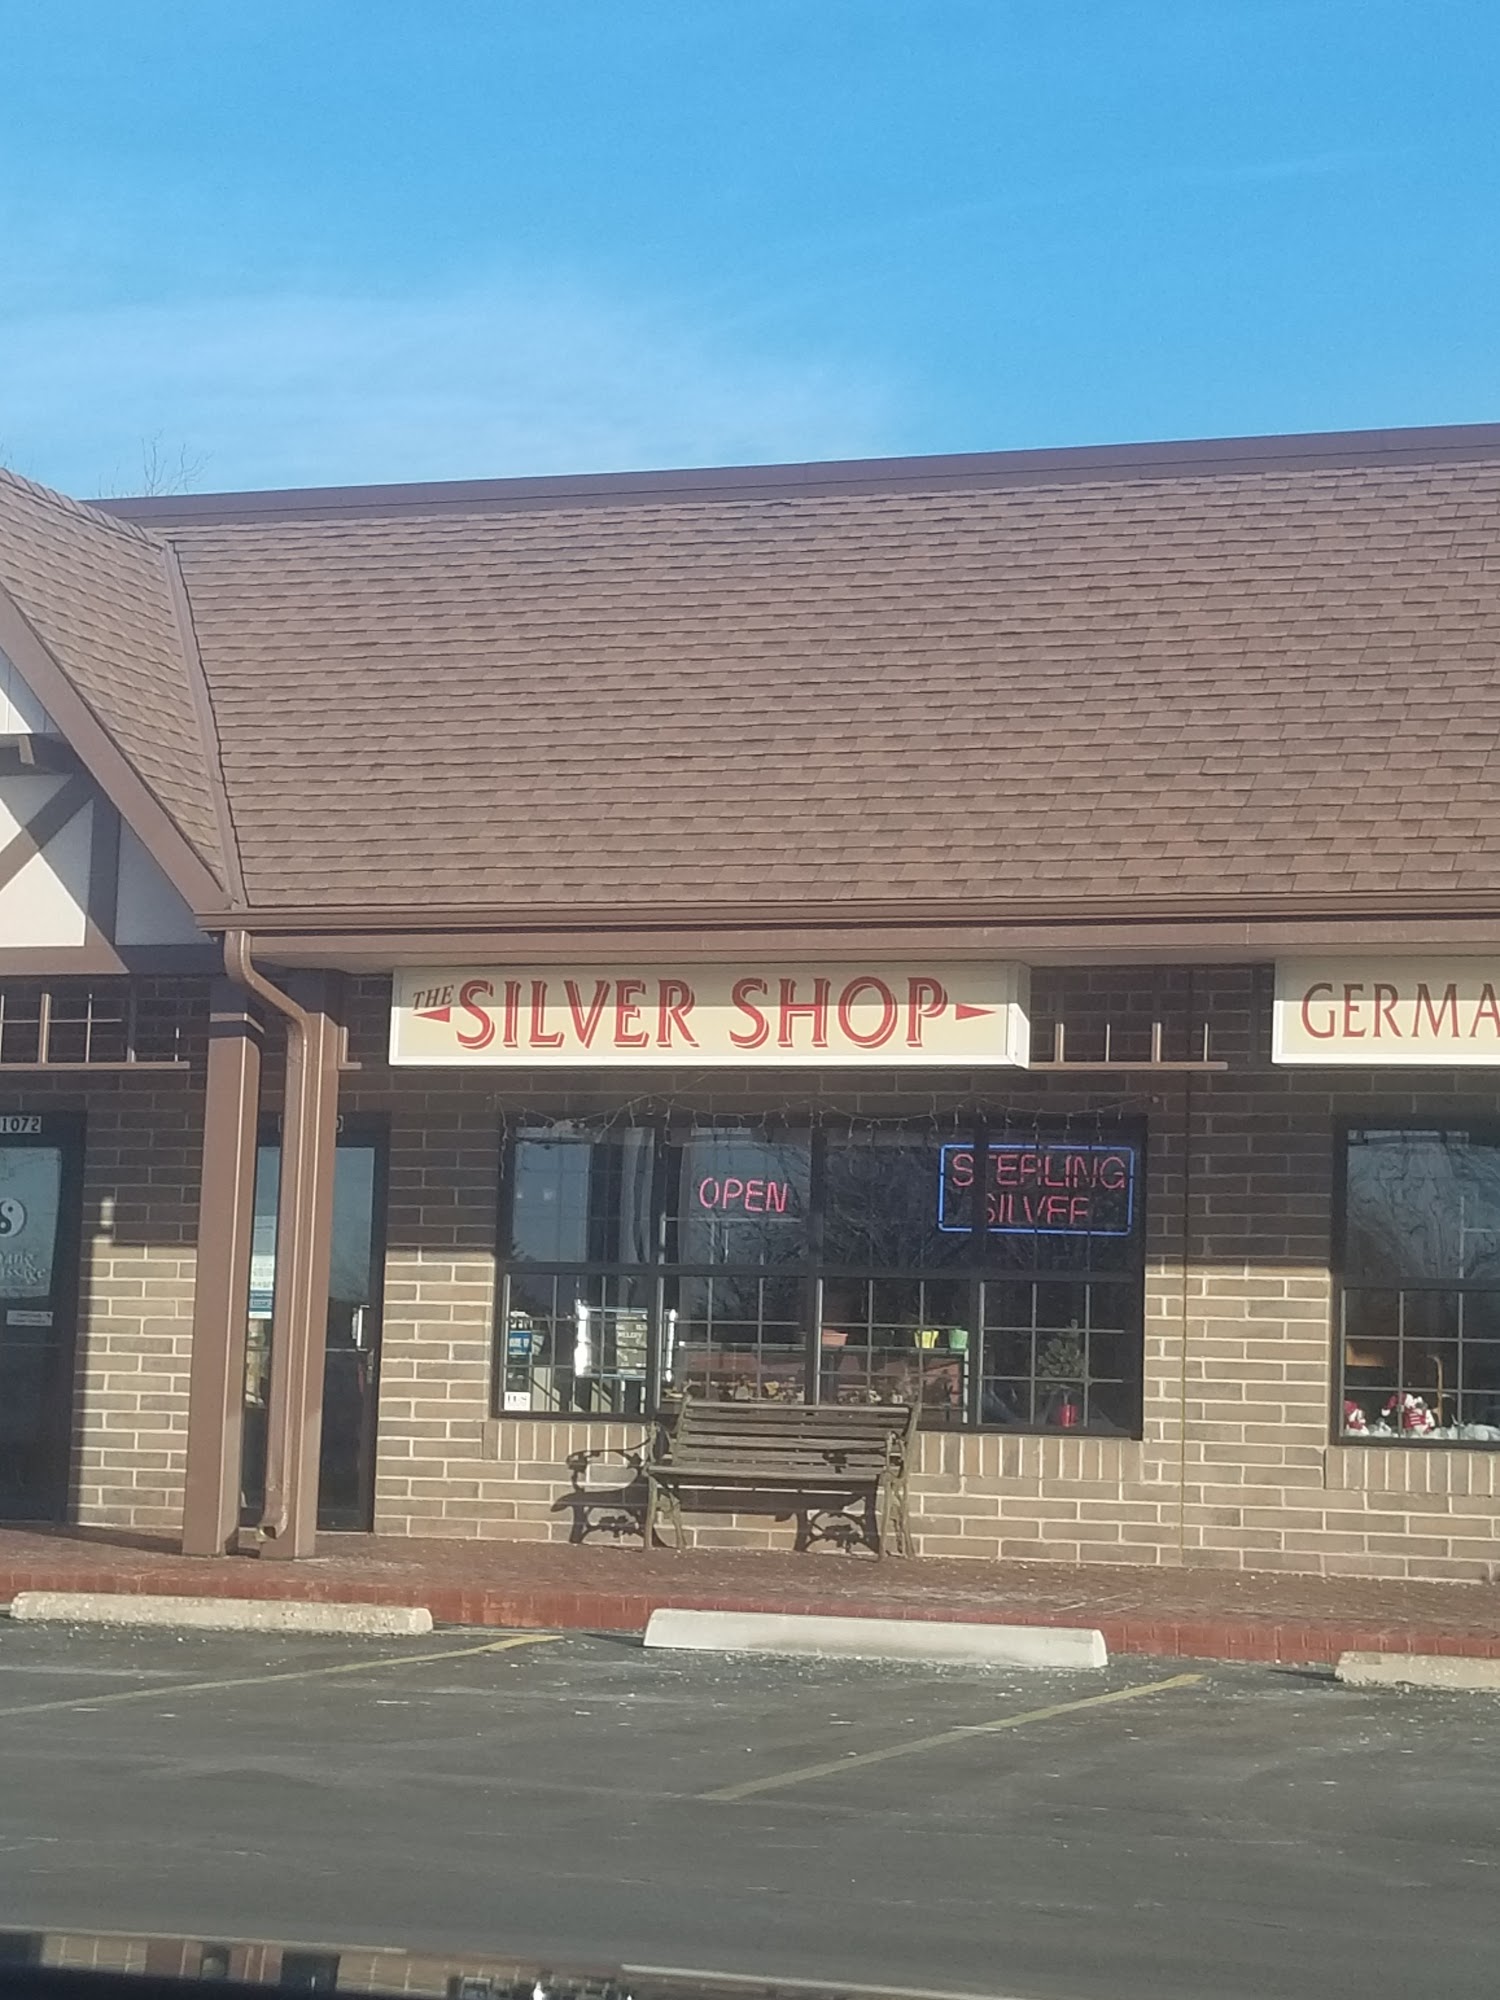 The Silver Shop, Native American treasures